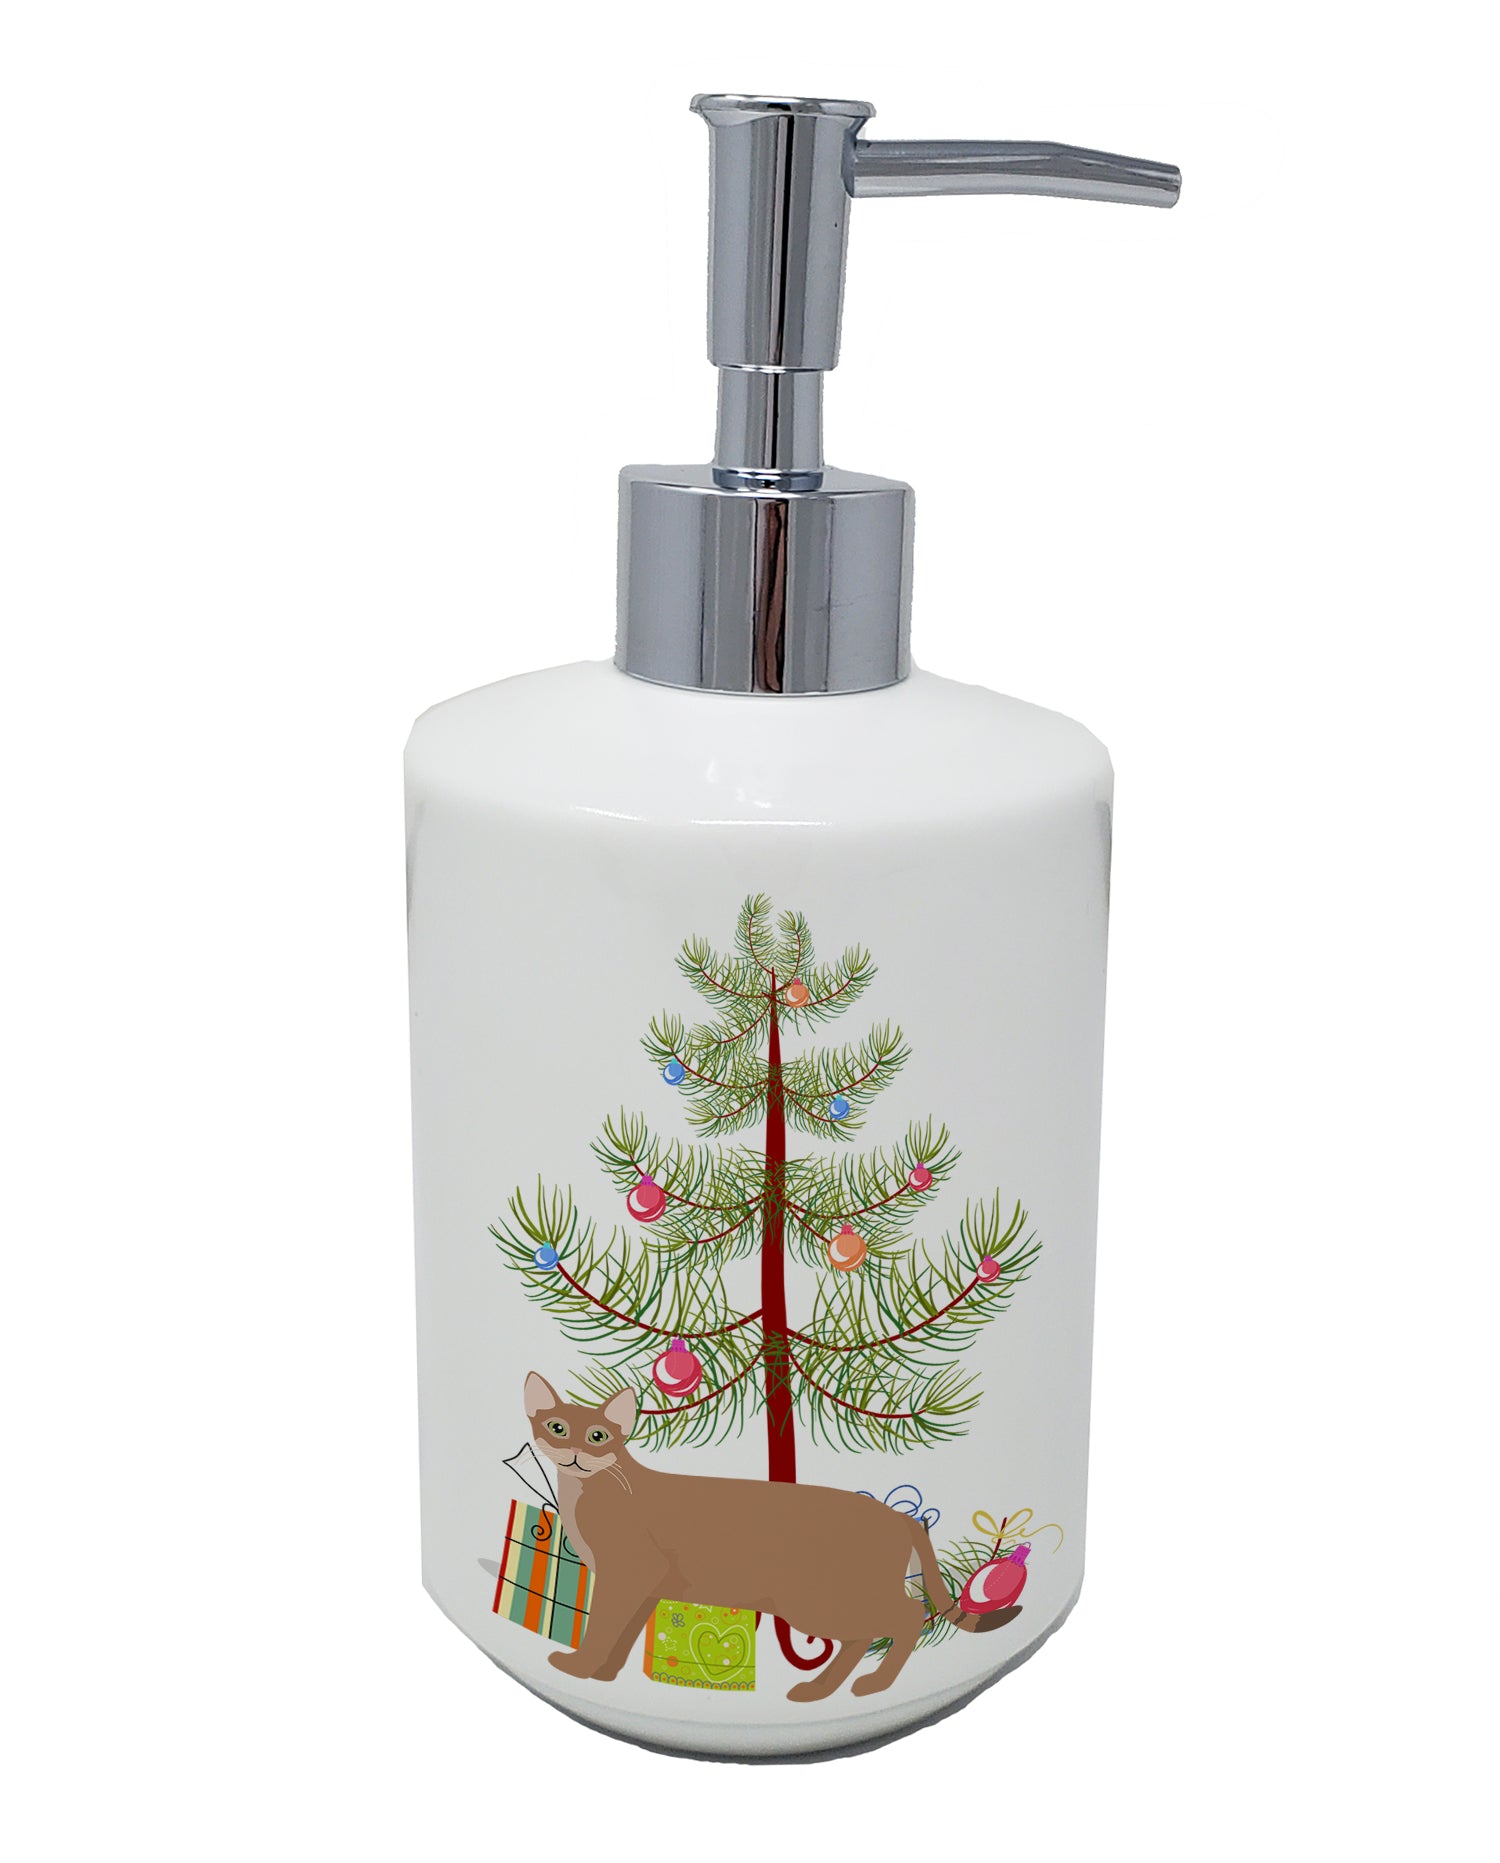 Buy this Chausie Cat Merry Christmas Ceramic Soap Dispenser